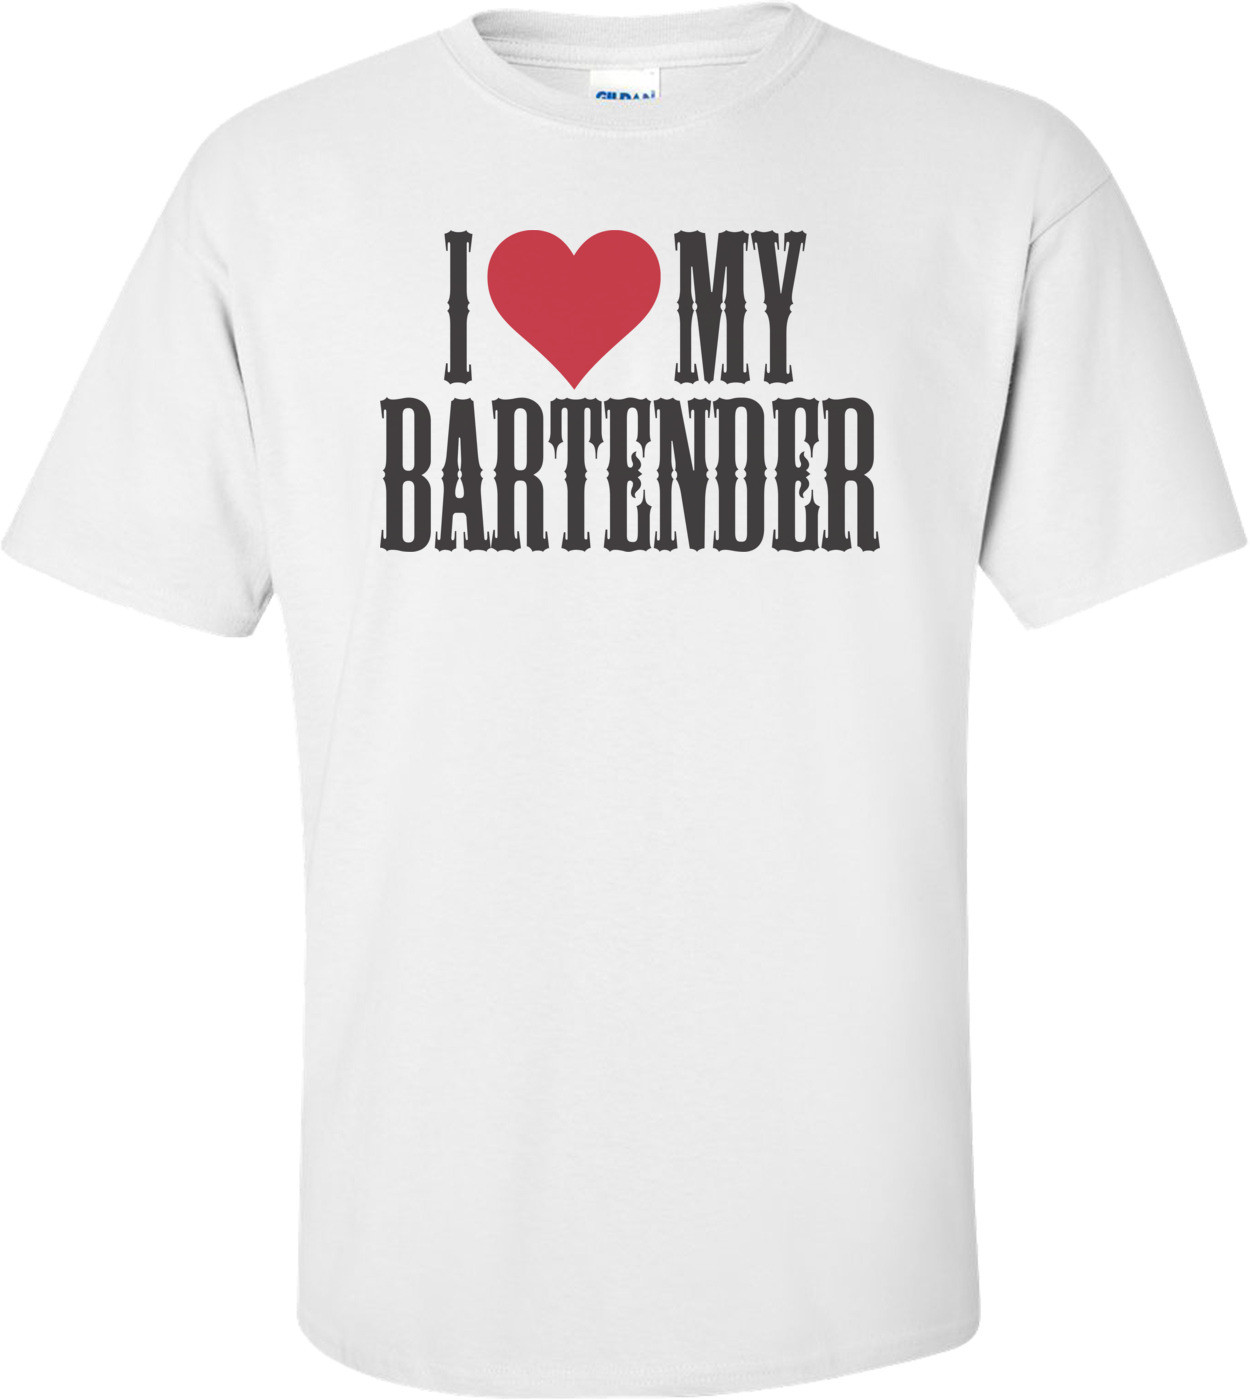 I Love My Bartender T-shirt